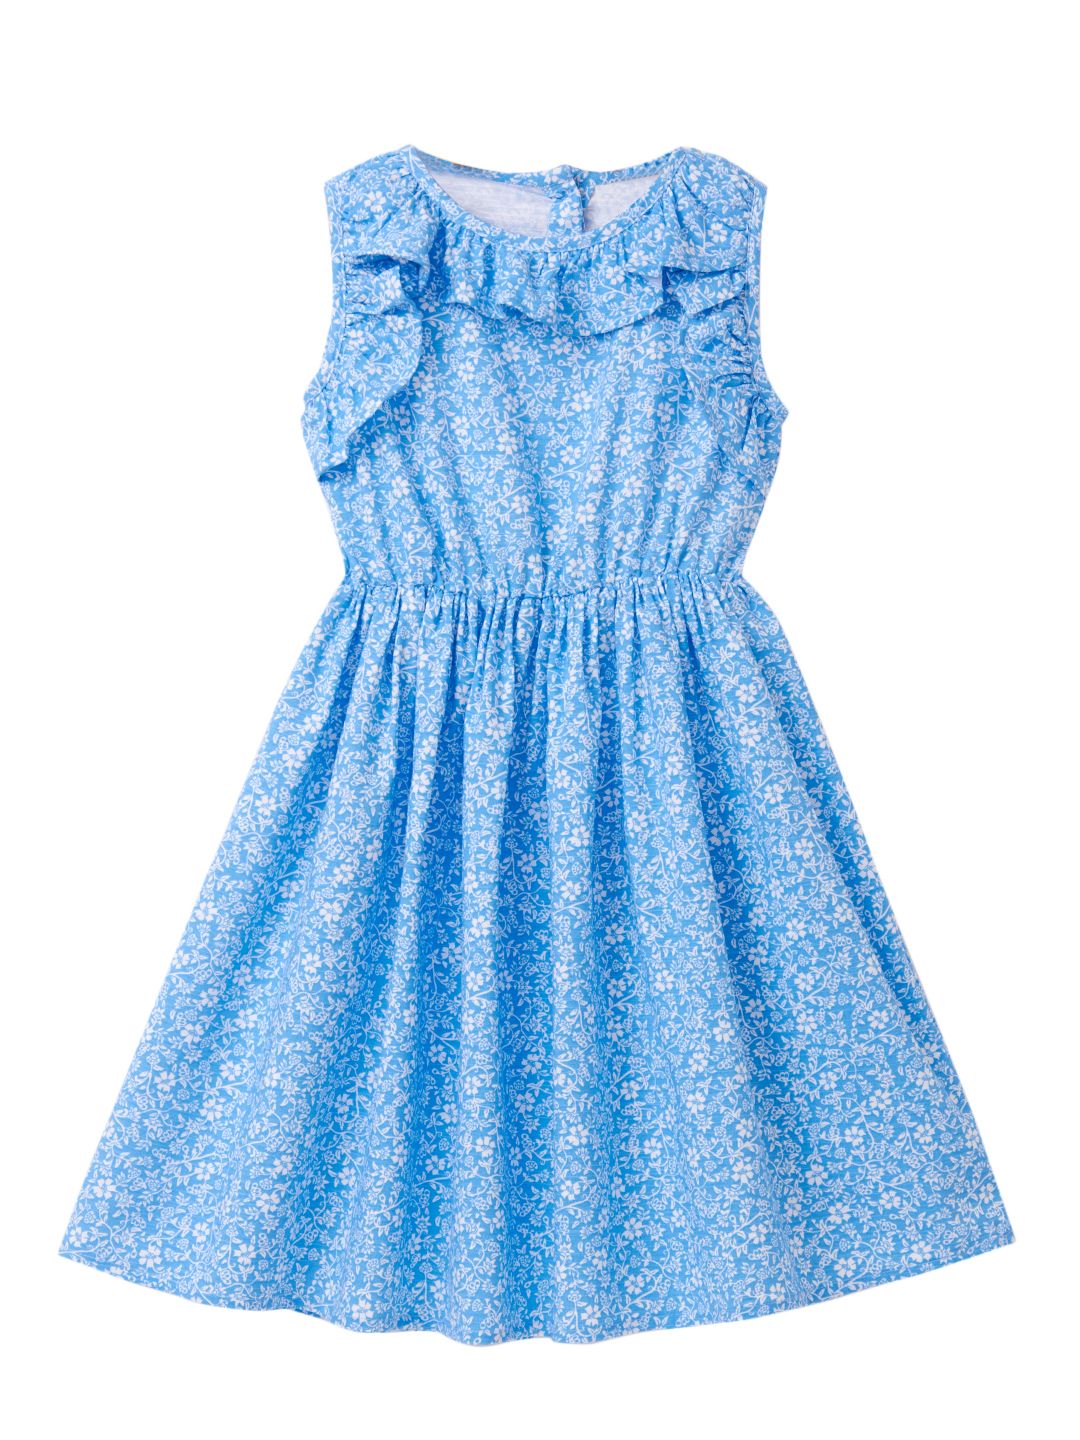 Girls Regular Rayon Fashion Dress, Azure Blue